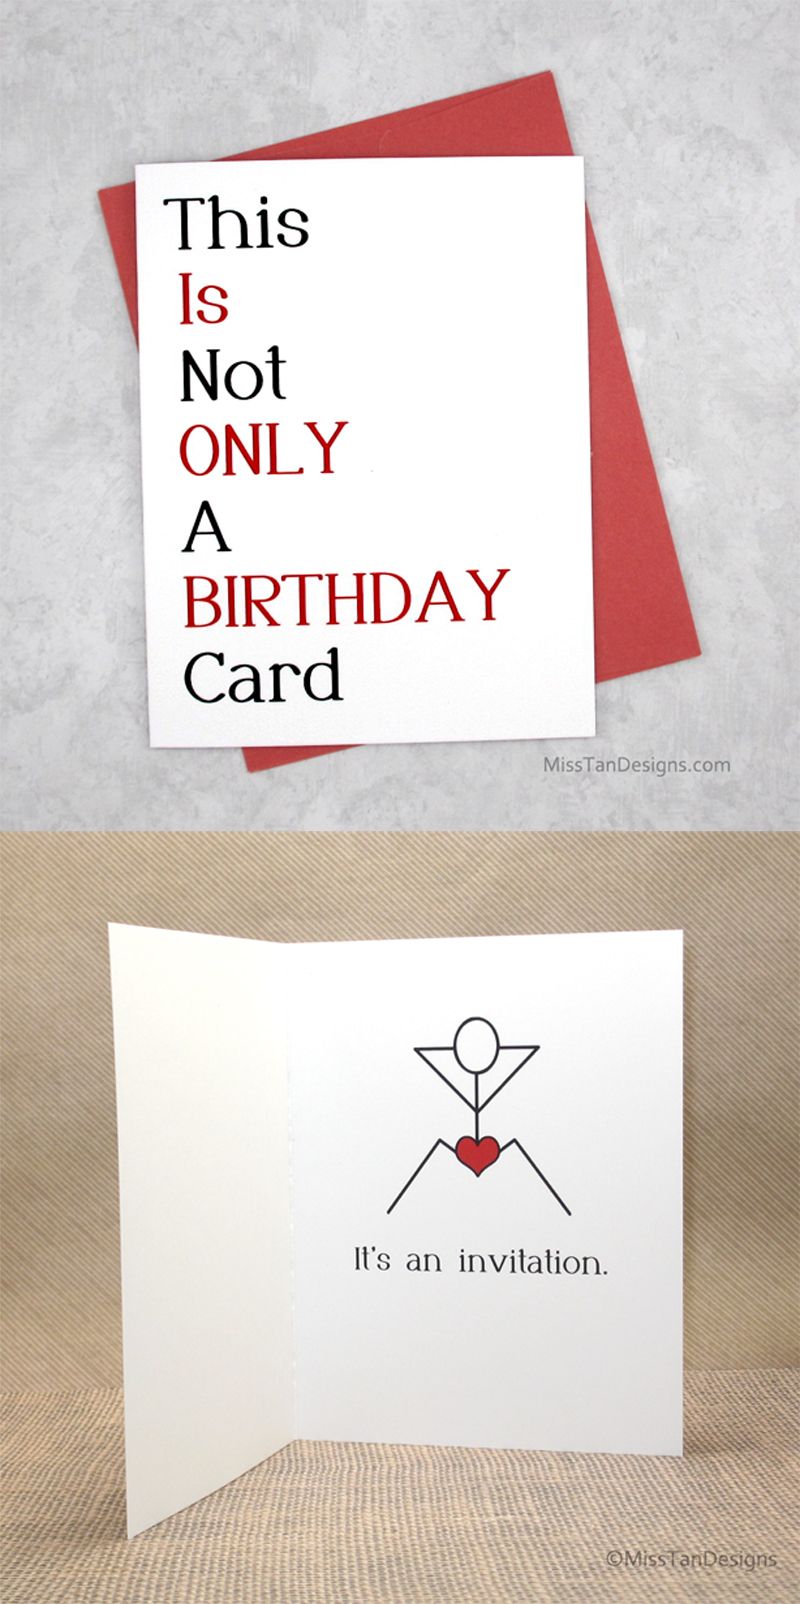 Sexy birthday ecard for wife